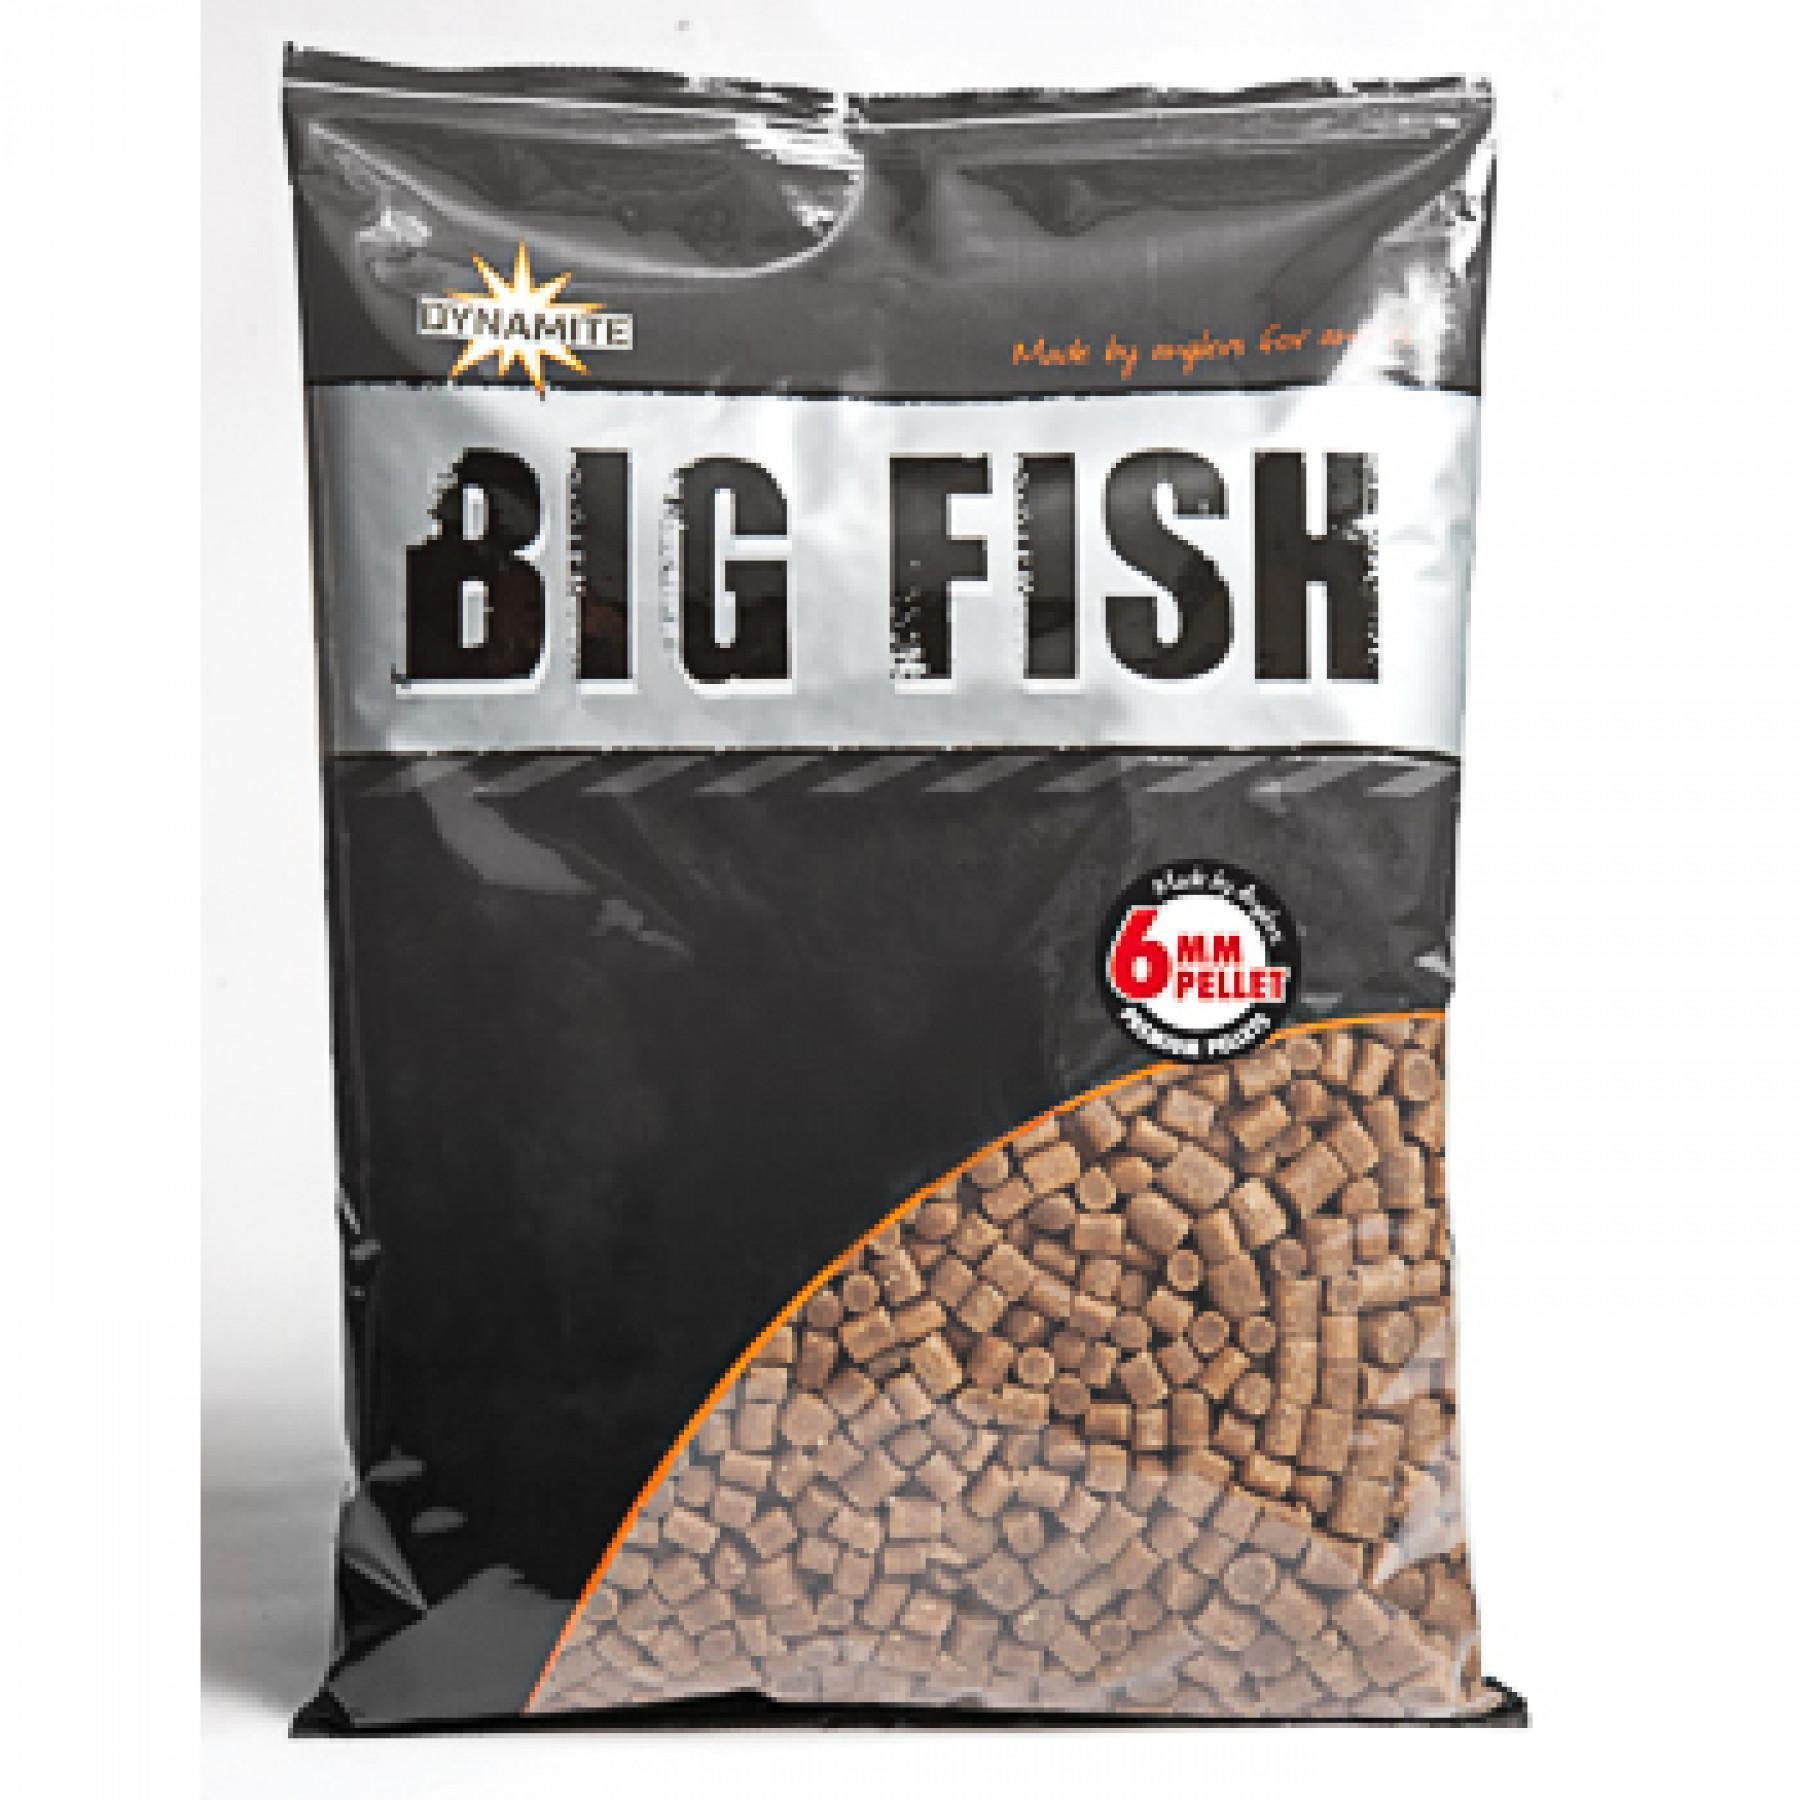 Big fish pellets dynamit bete 1,8kg